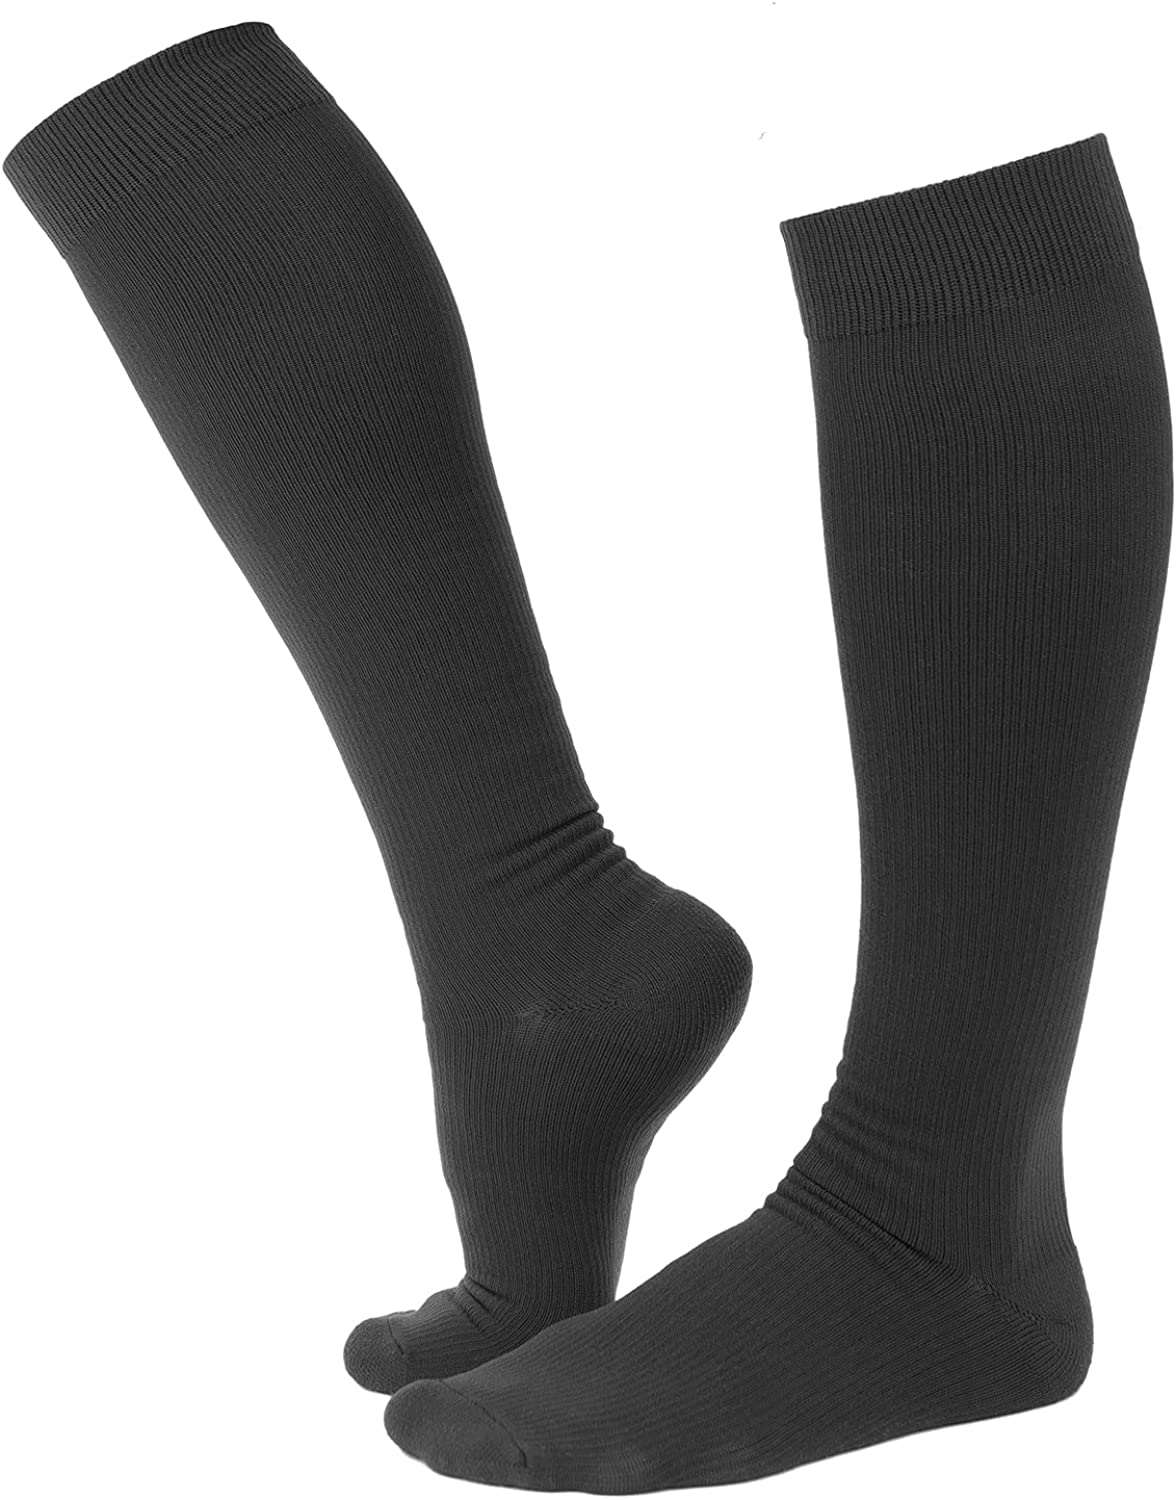 SIPDER-MAN - Head - Pack of 3 pairs of Sport socks (S 9-11